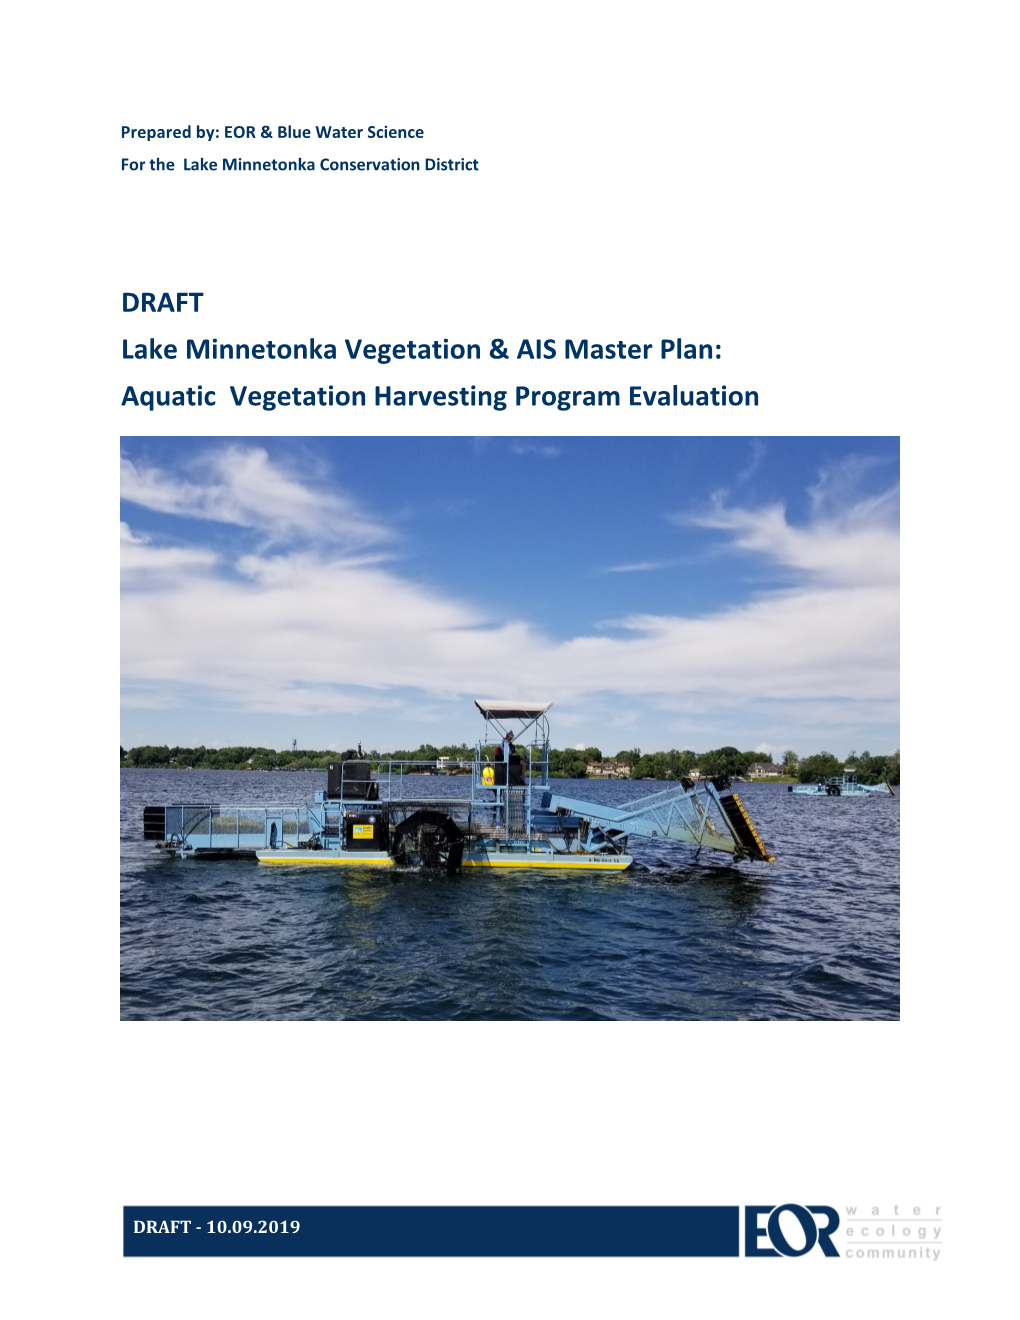 Aquatic Vegetation Harvesting Program Evaluation